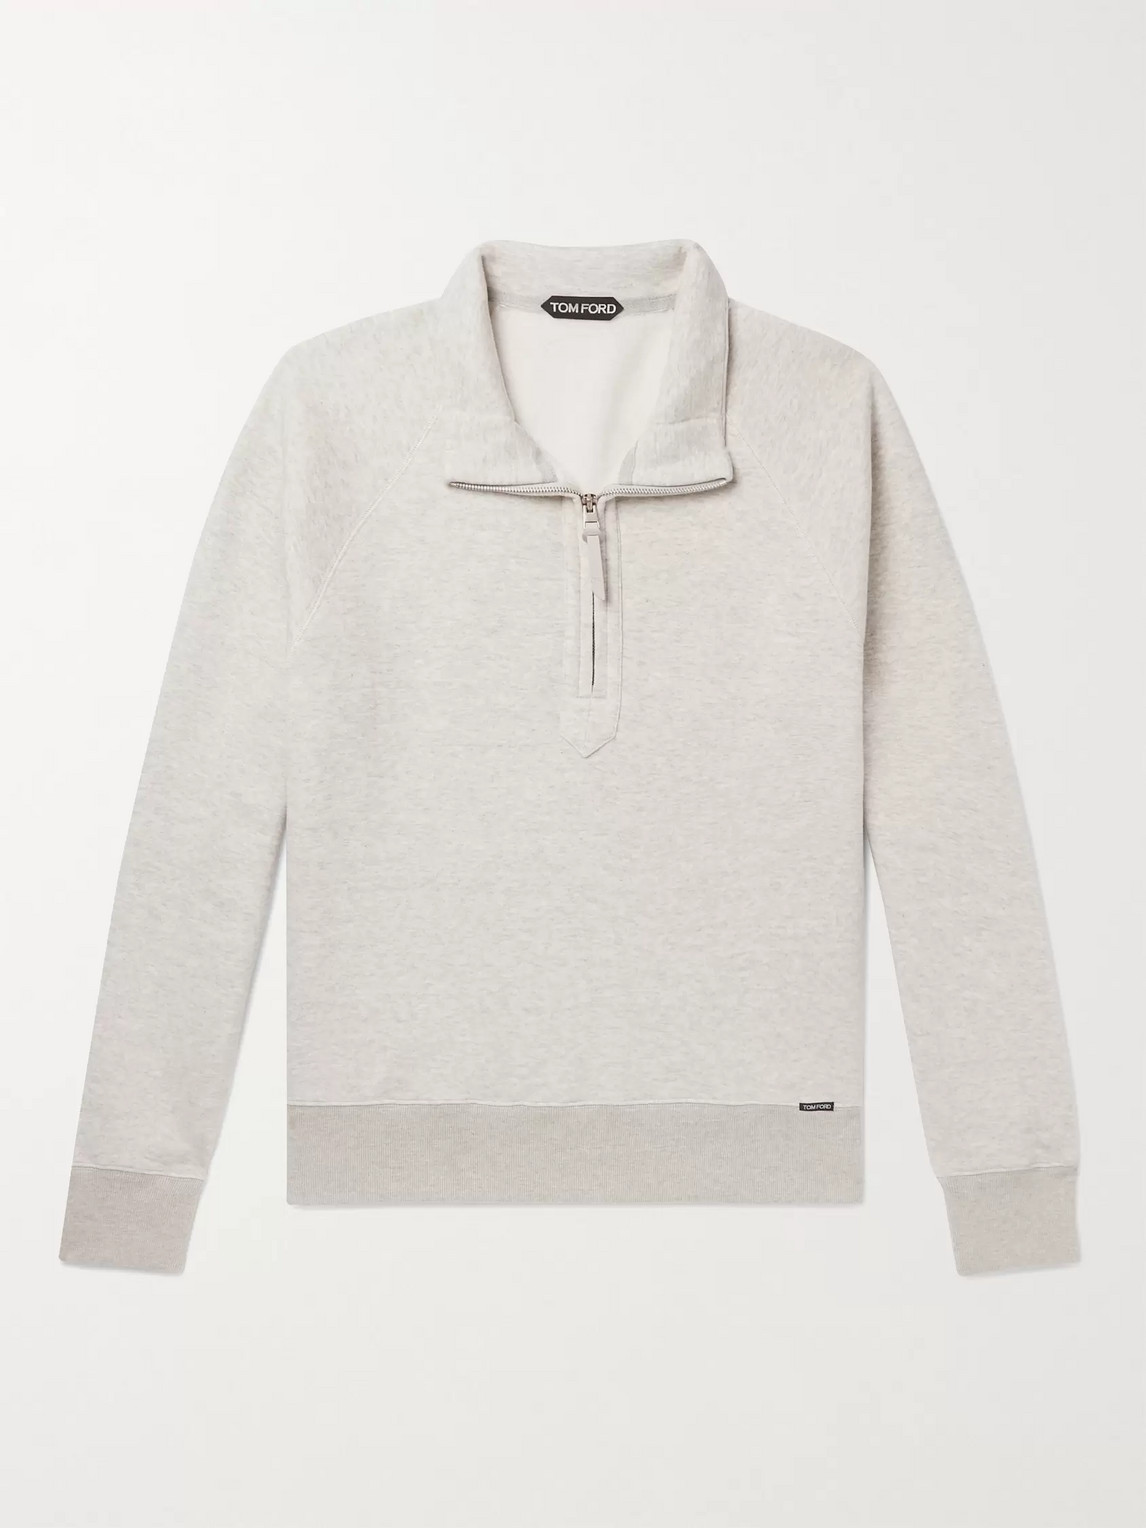 Tom Ford Garment-dyed Cotton-jersey Half-zip Sweatshirt In Gray